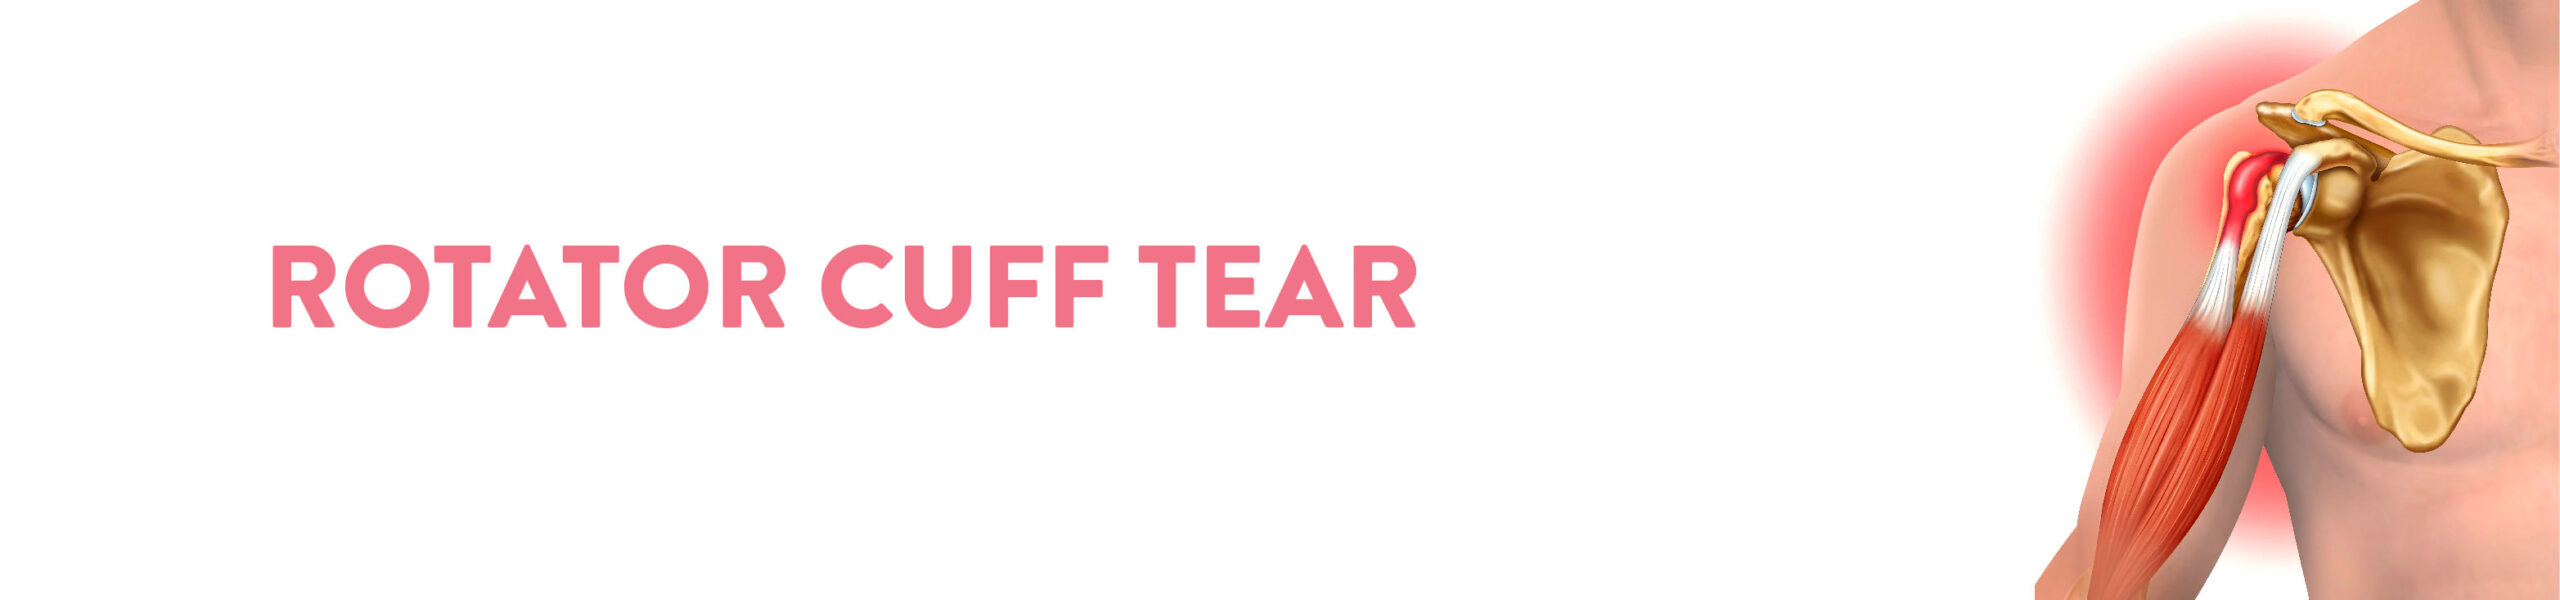 What is a rotator cuff tear?